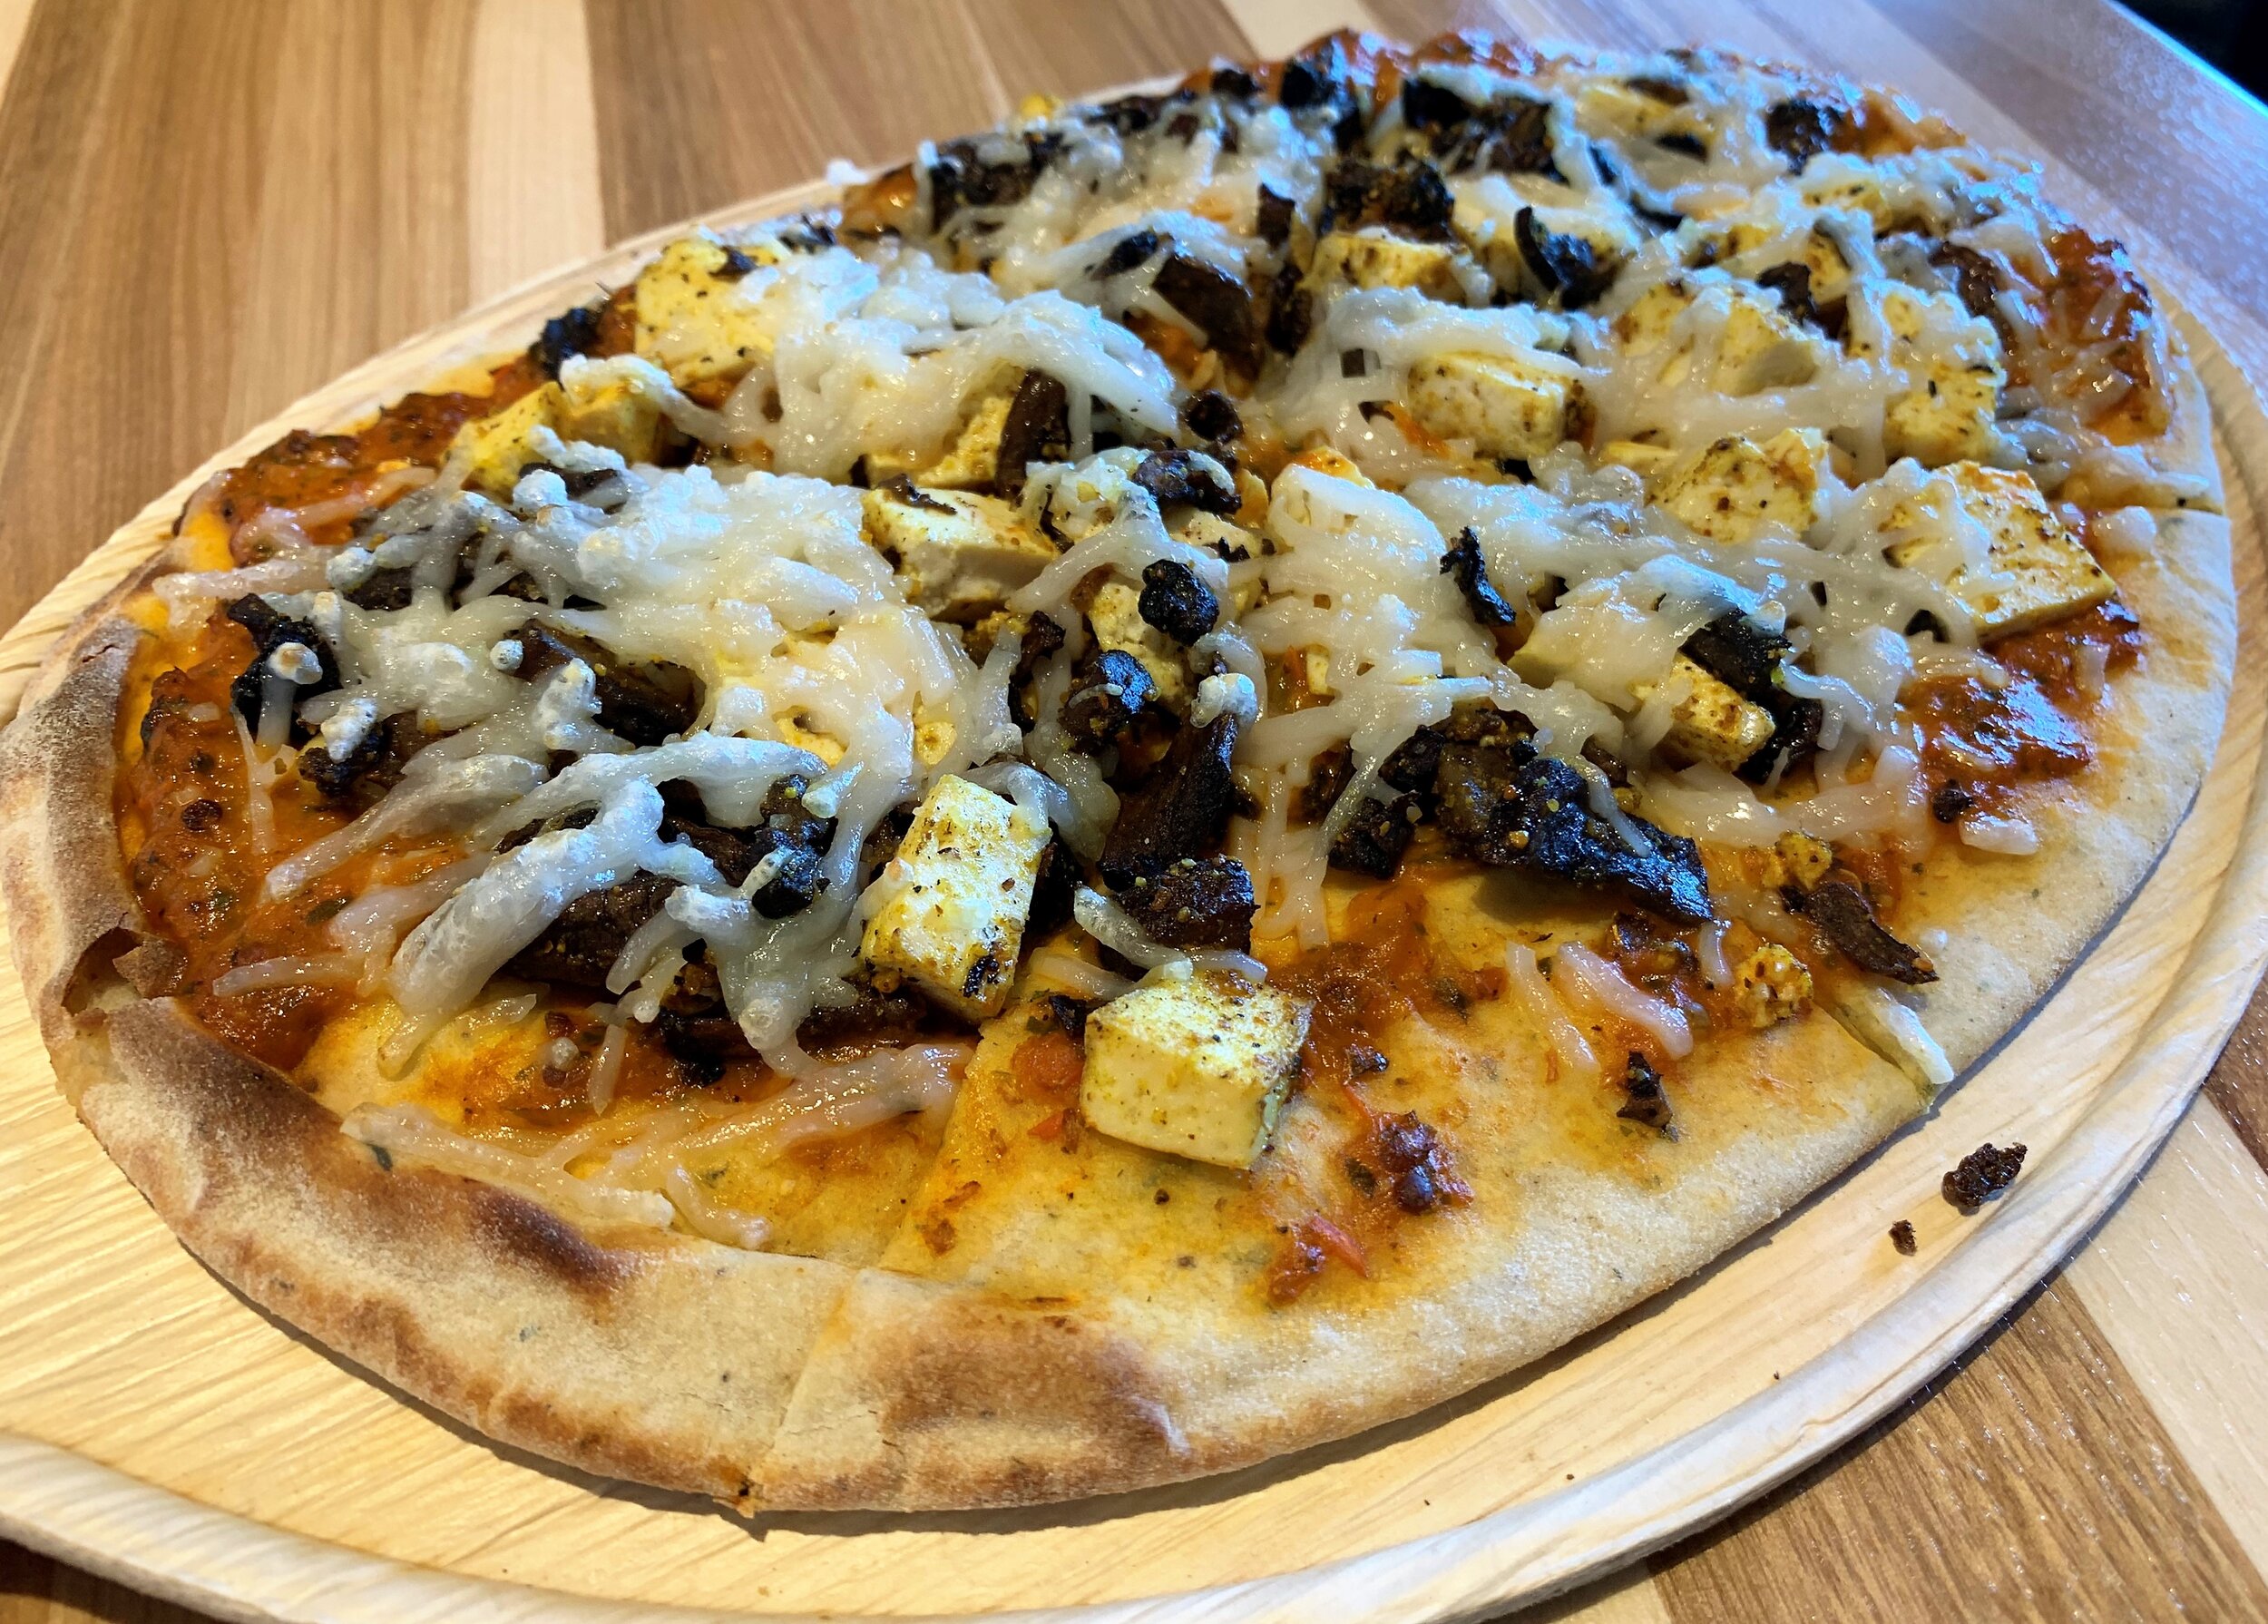 pizza karma build your own vegan pizza with harissa sauce, seasoned tofu, wild mushrooms, and Daiya cheese